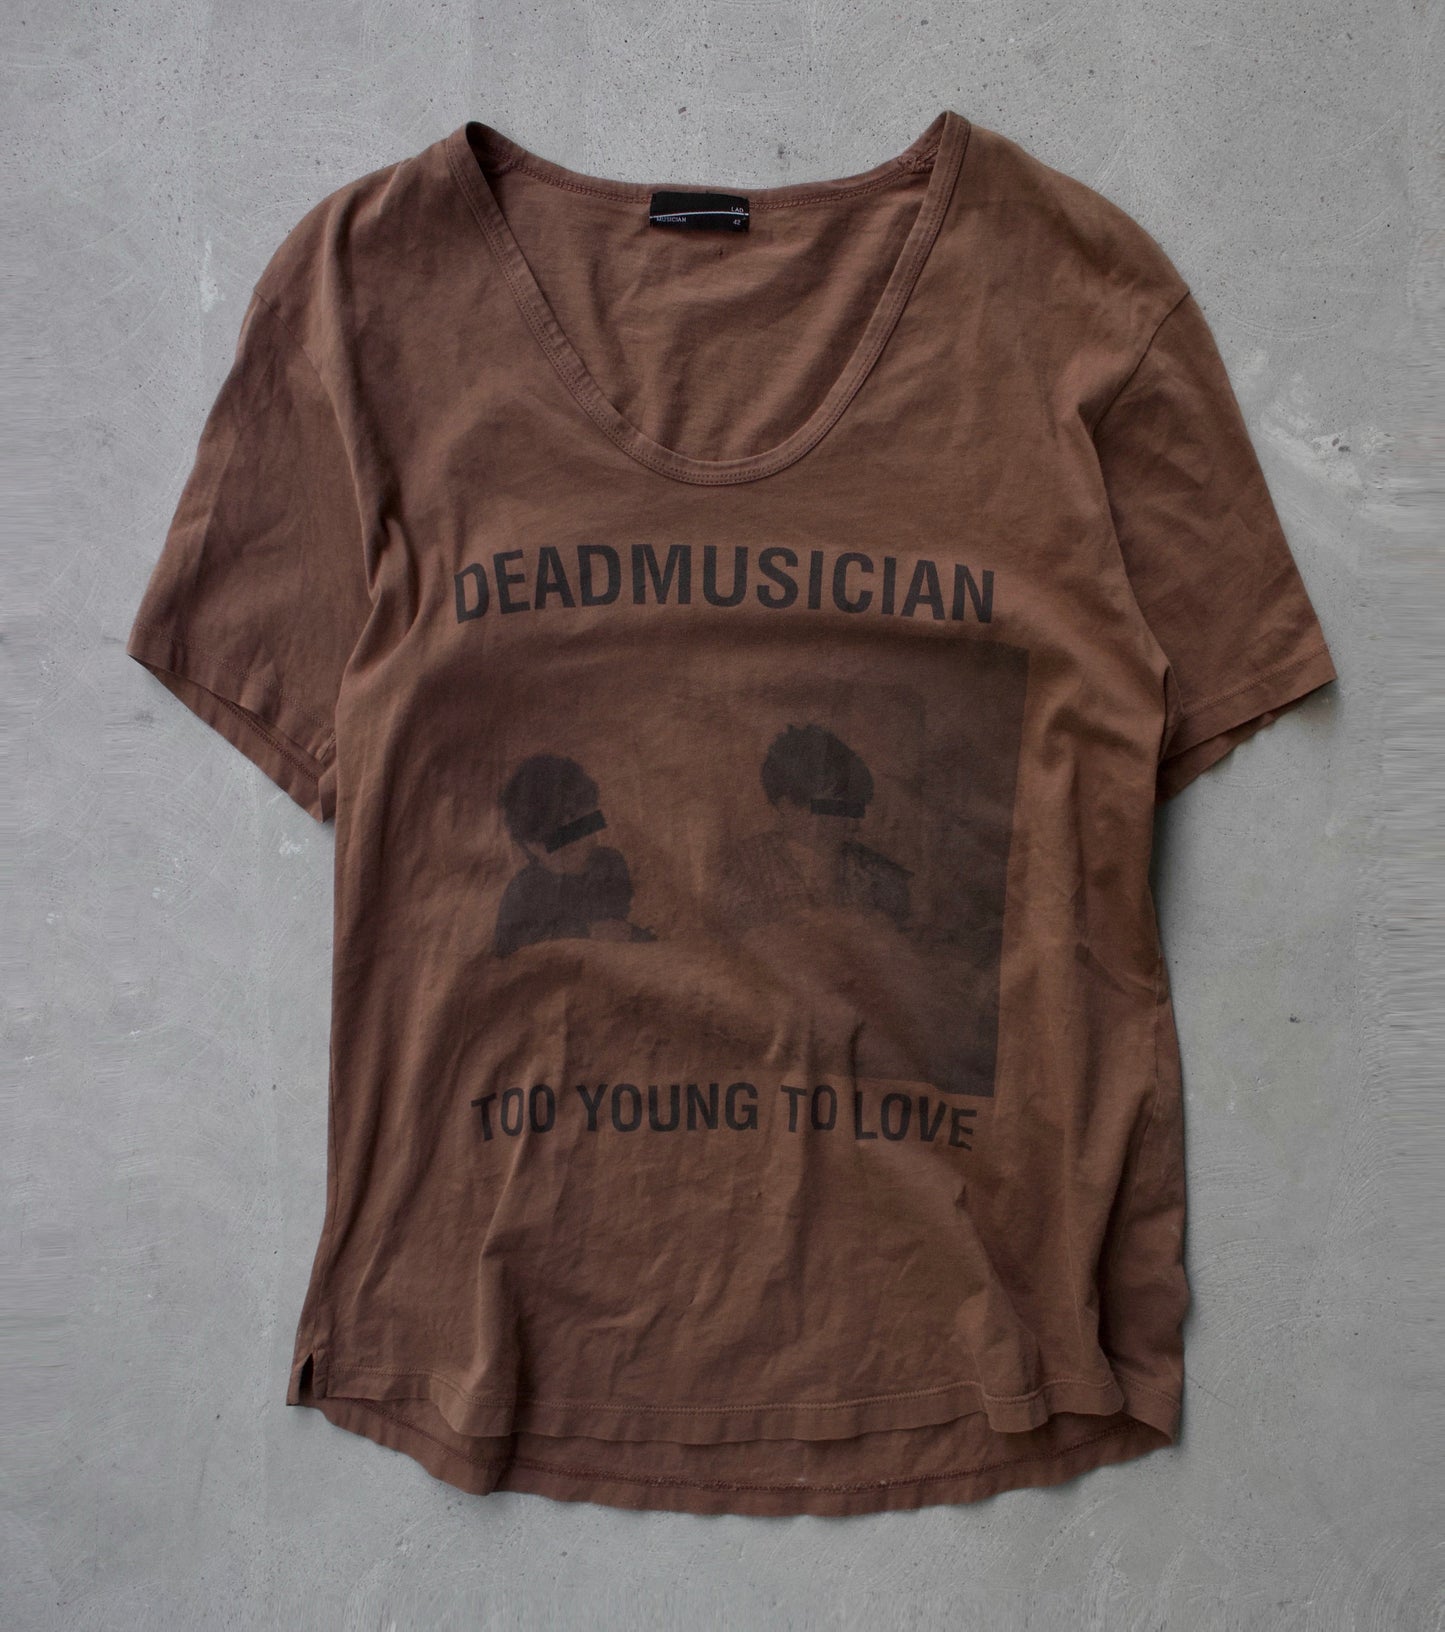 Lad Musician SS12 “DEADMUSICIAN” Graphic T-shirt